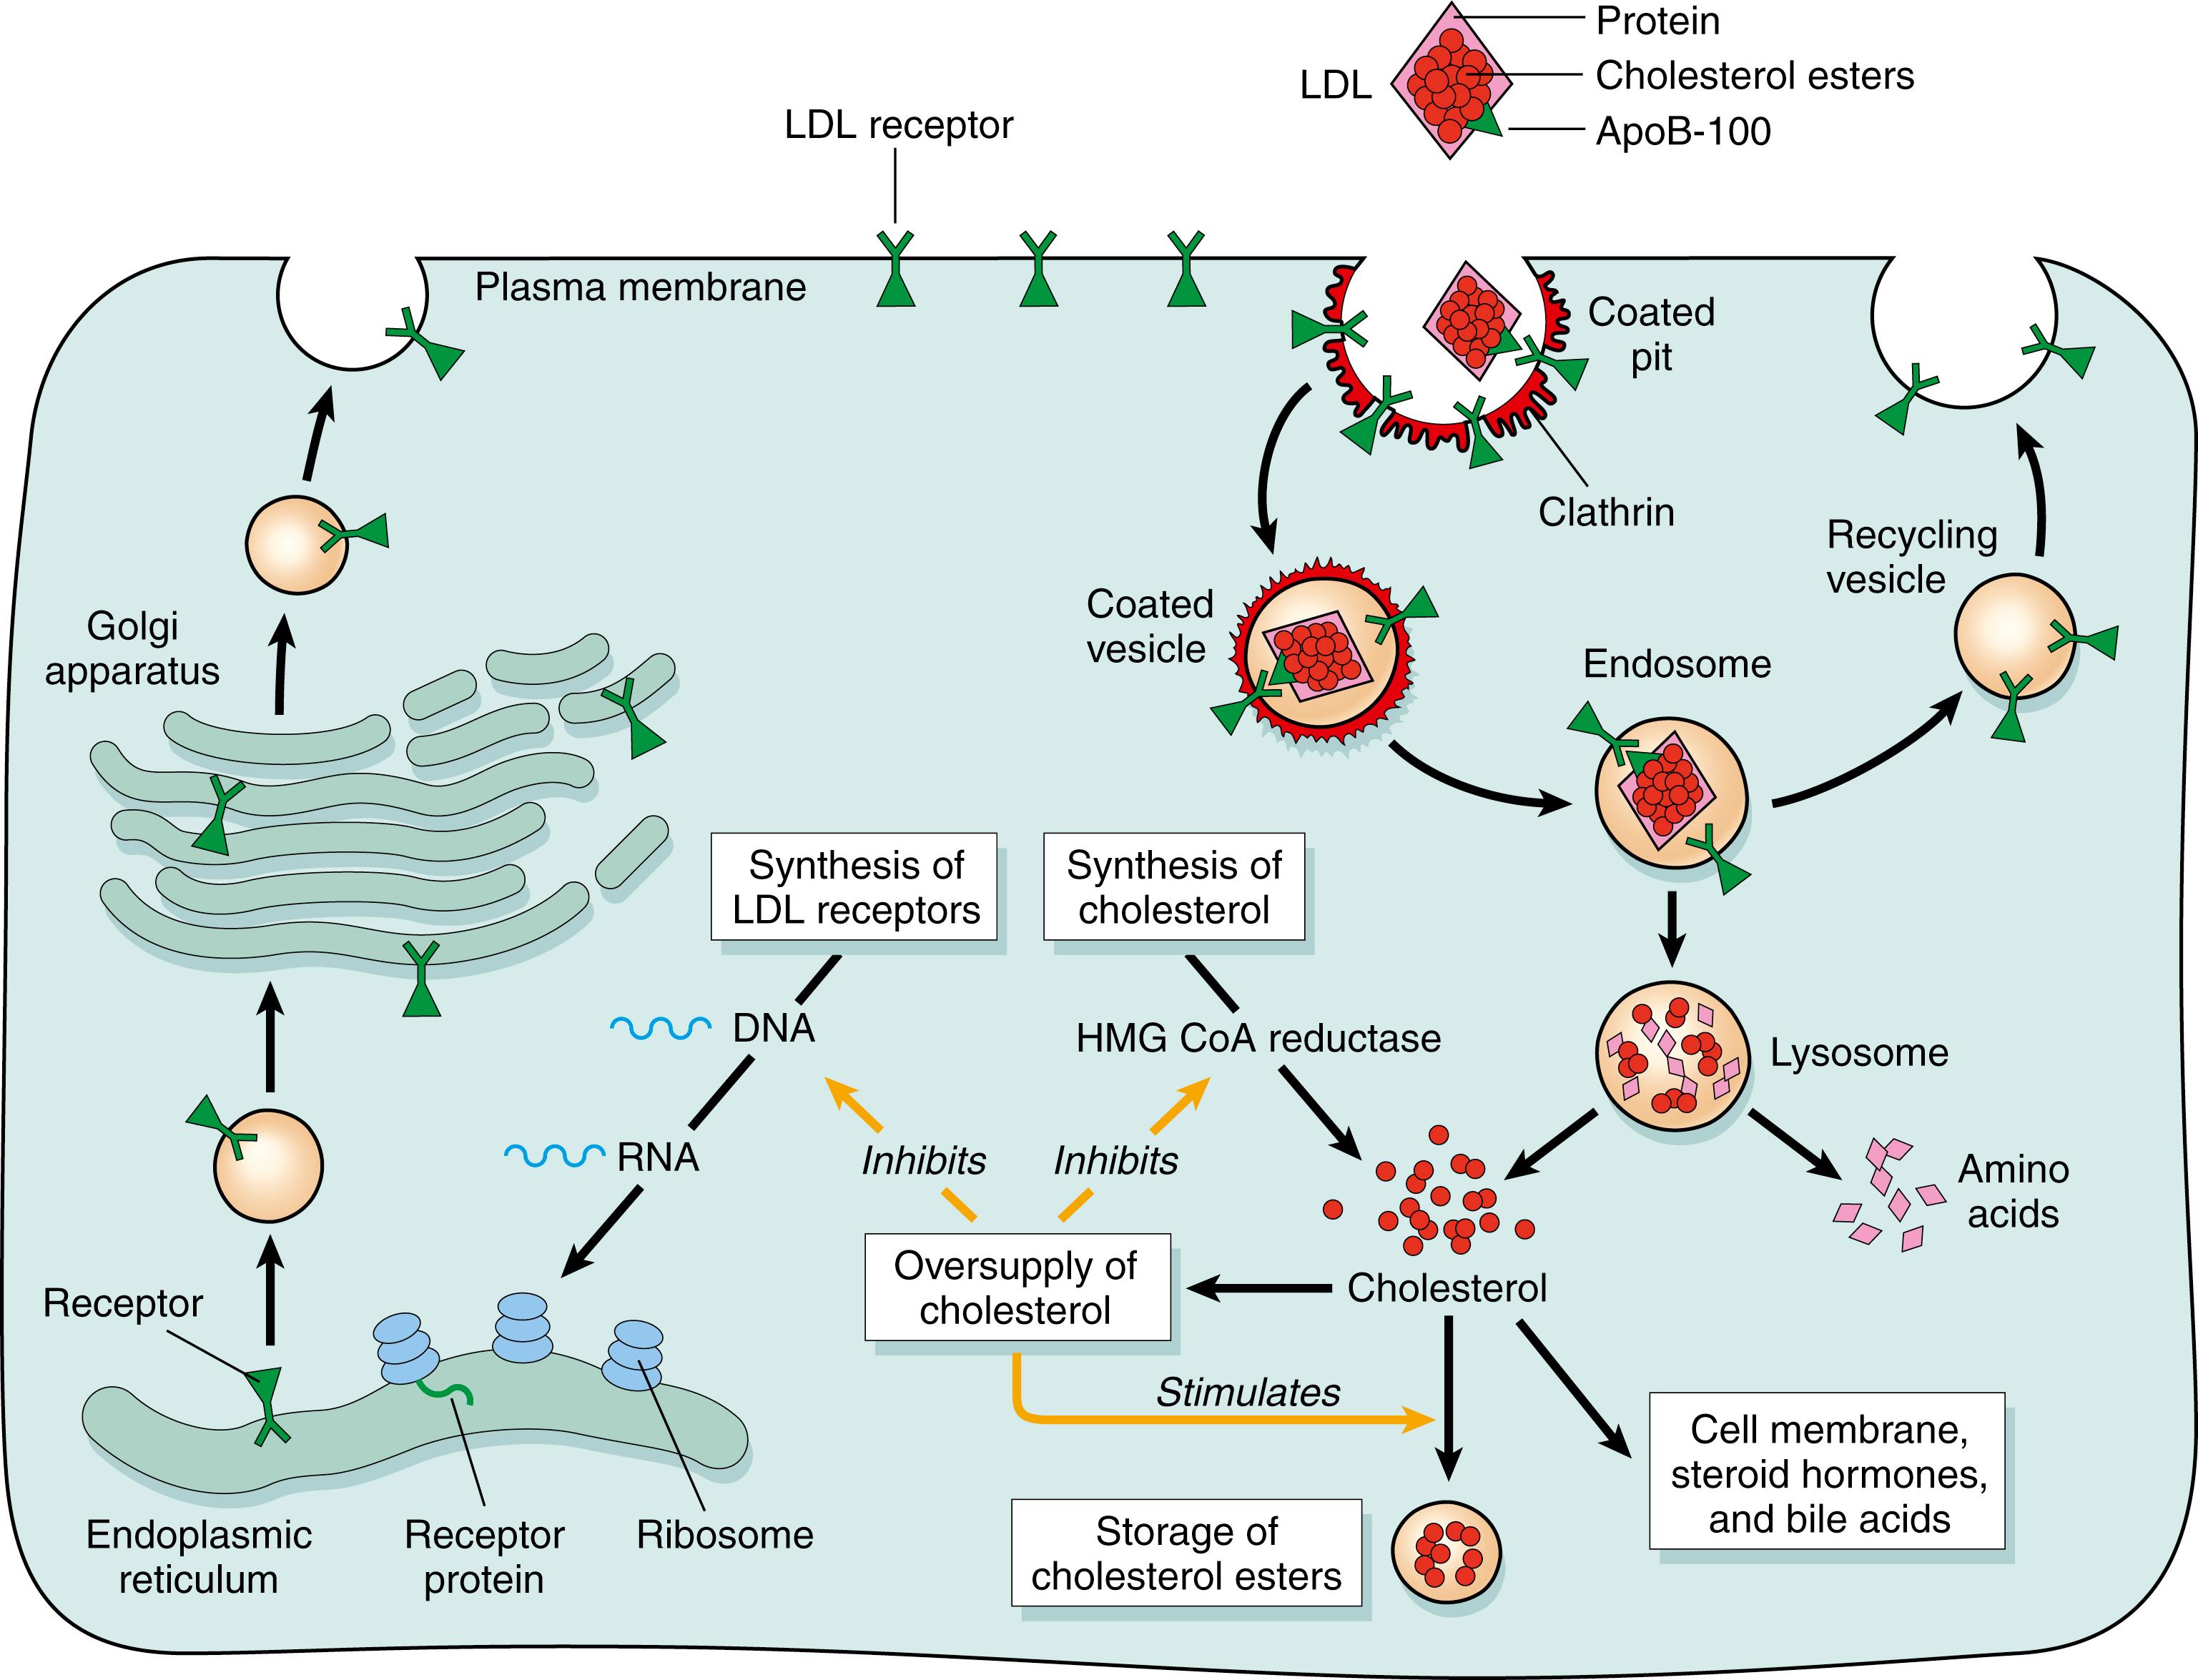 Figure 18.4, The low-density lipoprotein (LDL) receptor pathway and regulation of cholesterol metabolism.